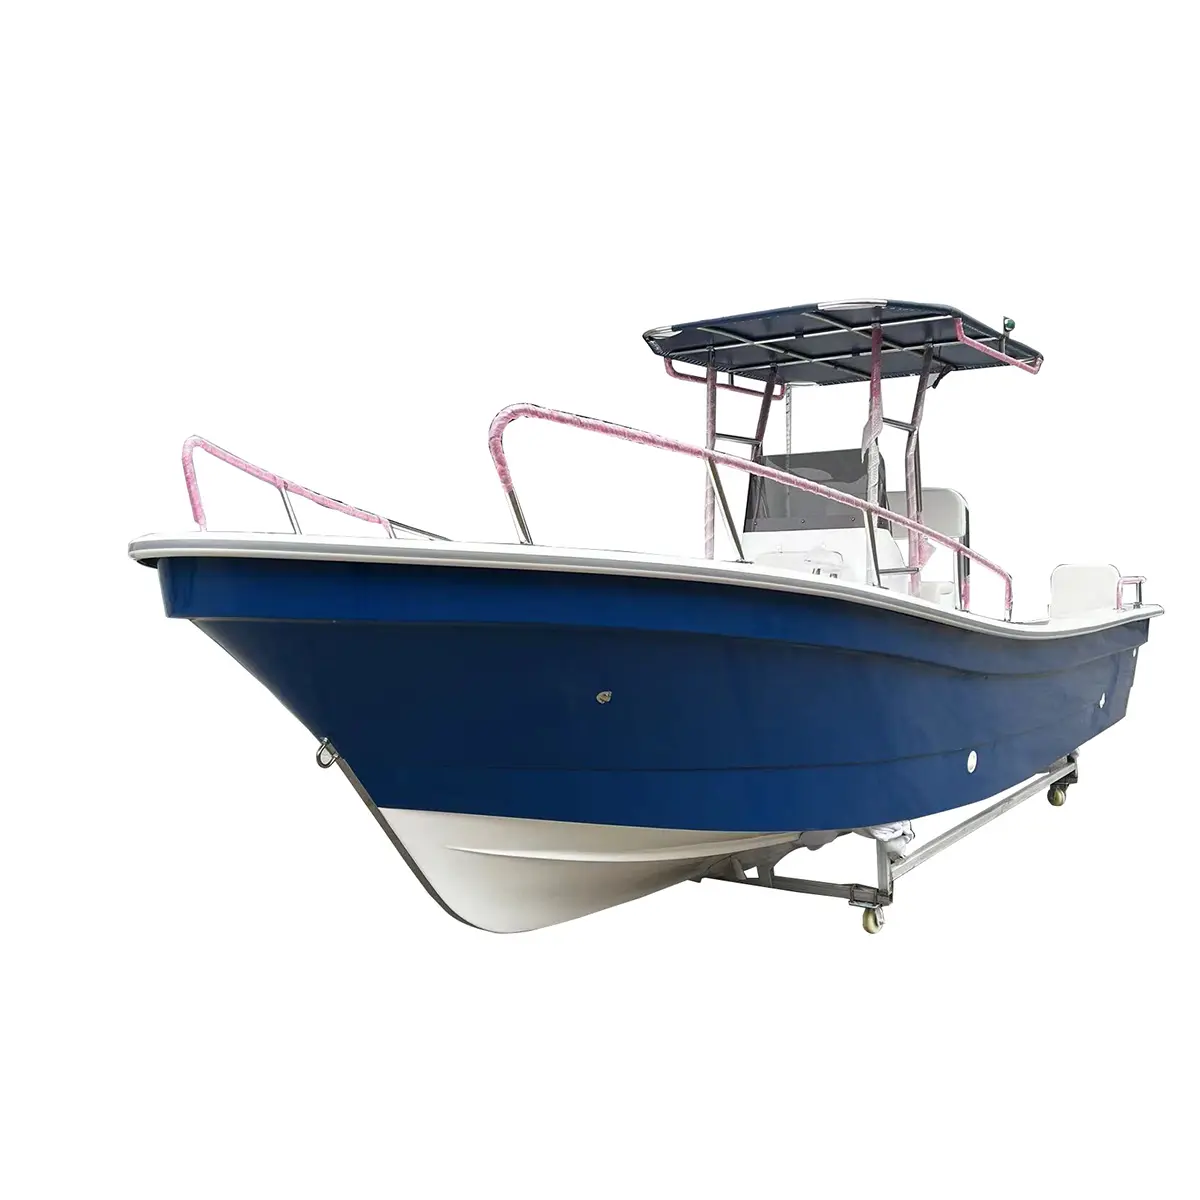 Liya 22ft fishing boat mold fiberglass boats outboard center consoles